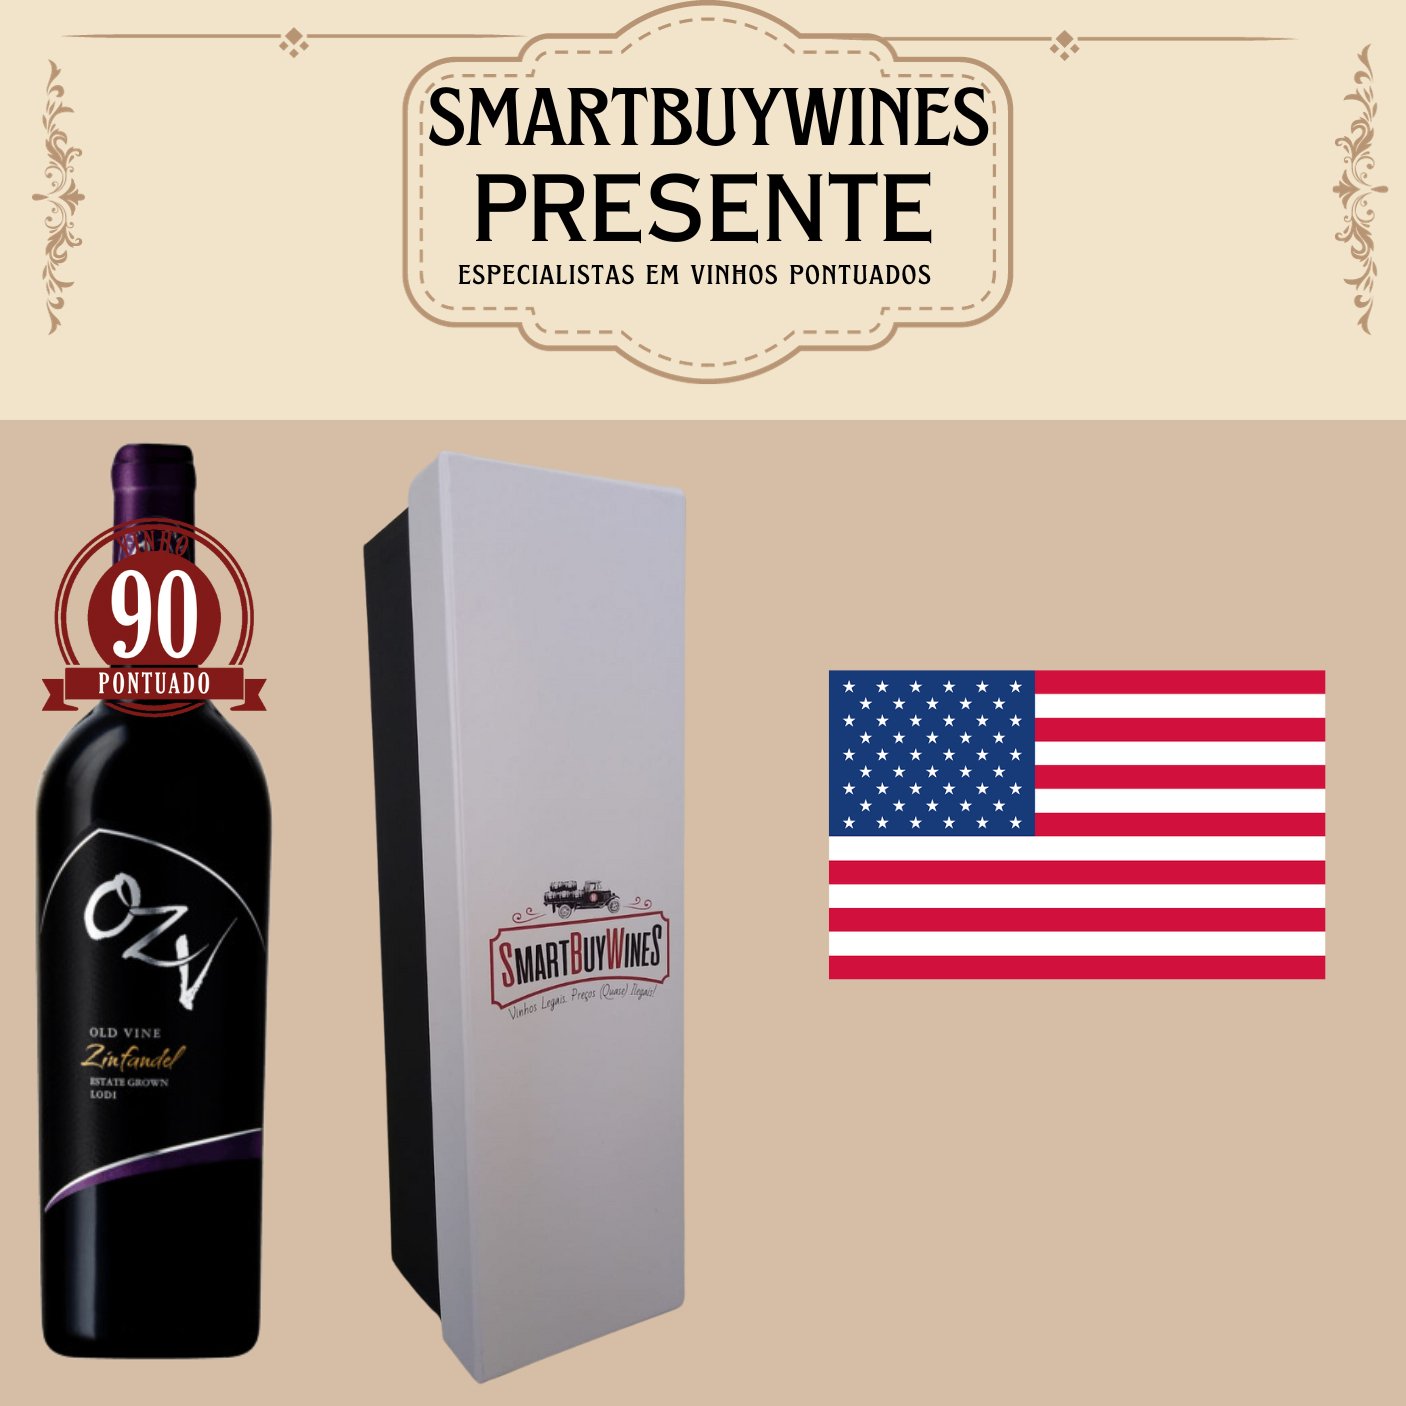 Presente - OZV Old Vine Zinfandel, Lodi, California 2019 embalado na caixa - SmartBuyWines.com.br